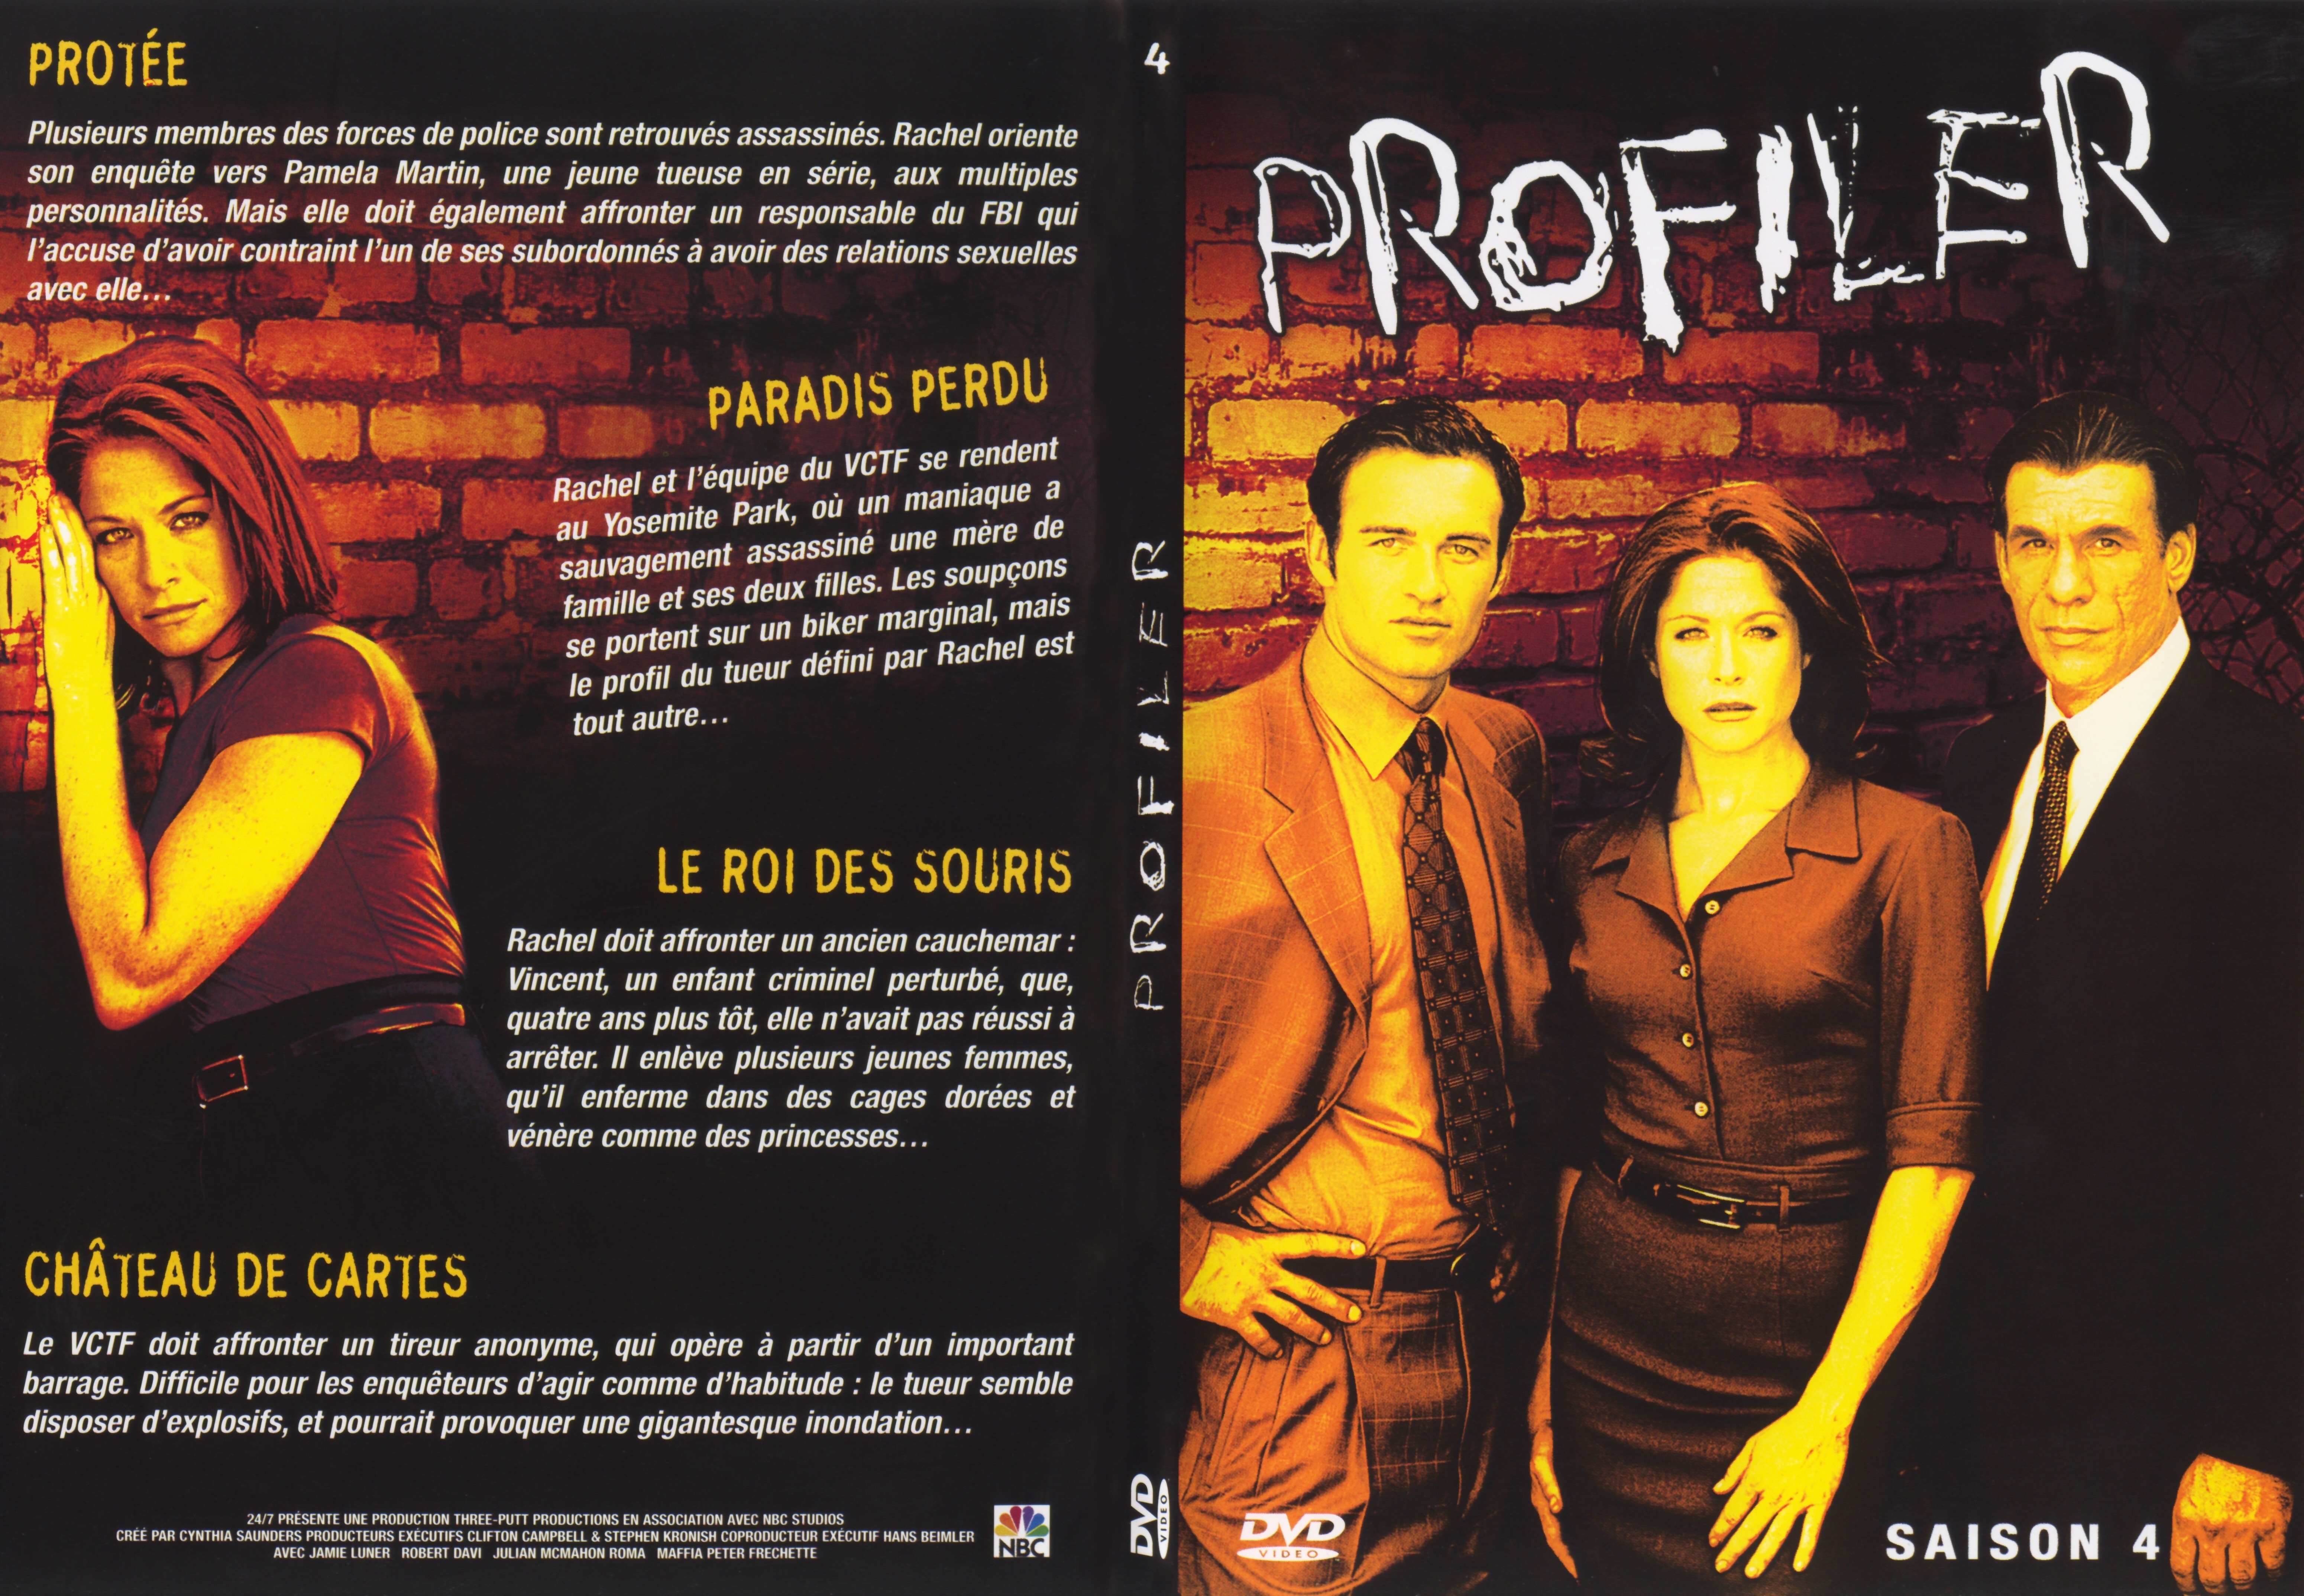 Jaquette DVD Profiler saison 4 DVD 4